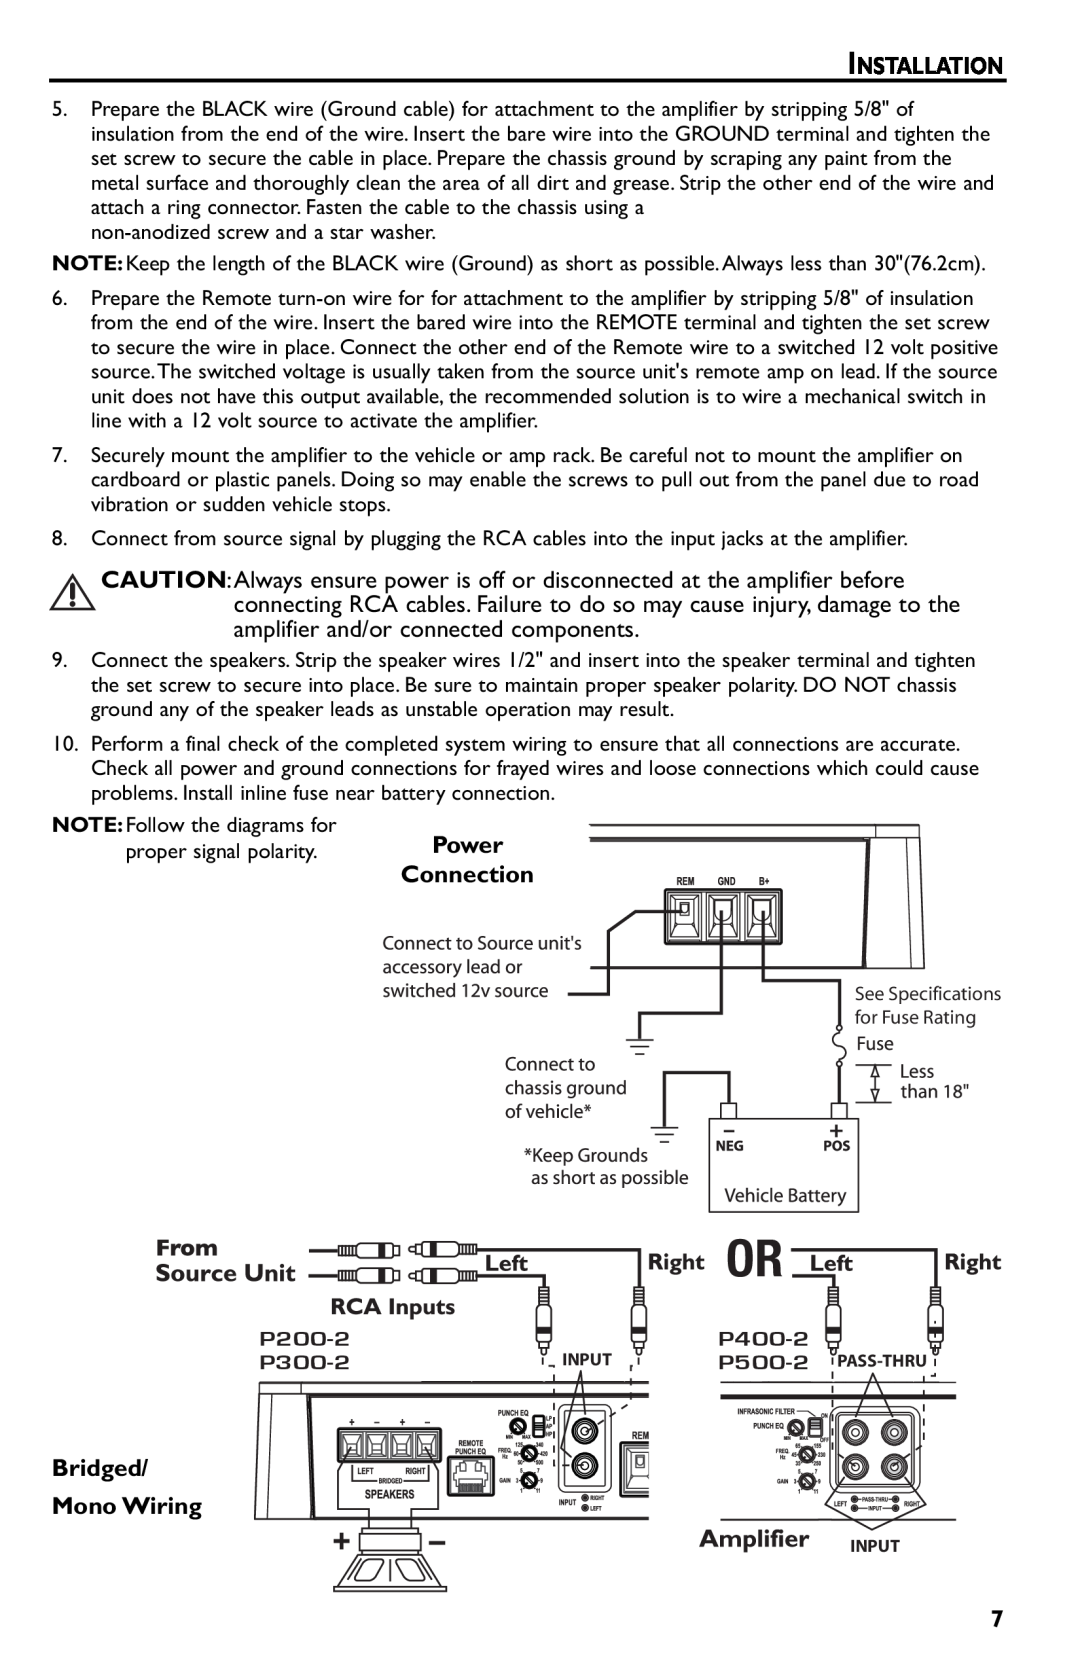 Rockford Fosgate p3002 manual Installation, Connection, Bridged Mono Wiring 